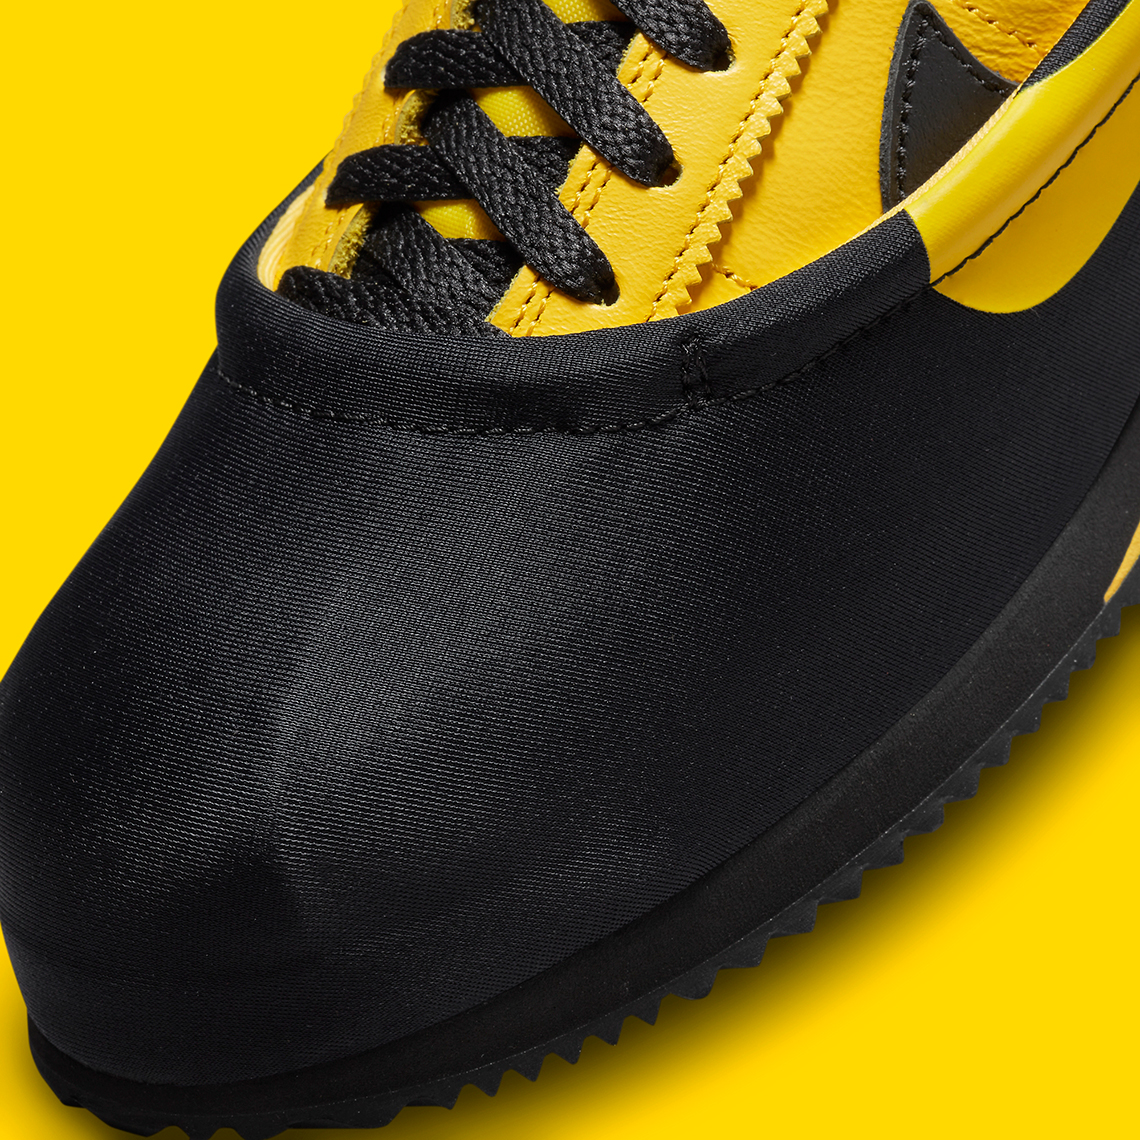 Clot Nike Cortez Clotez Yellow Black Dz3239 001 10